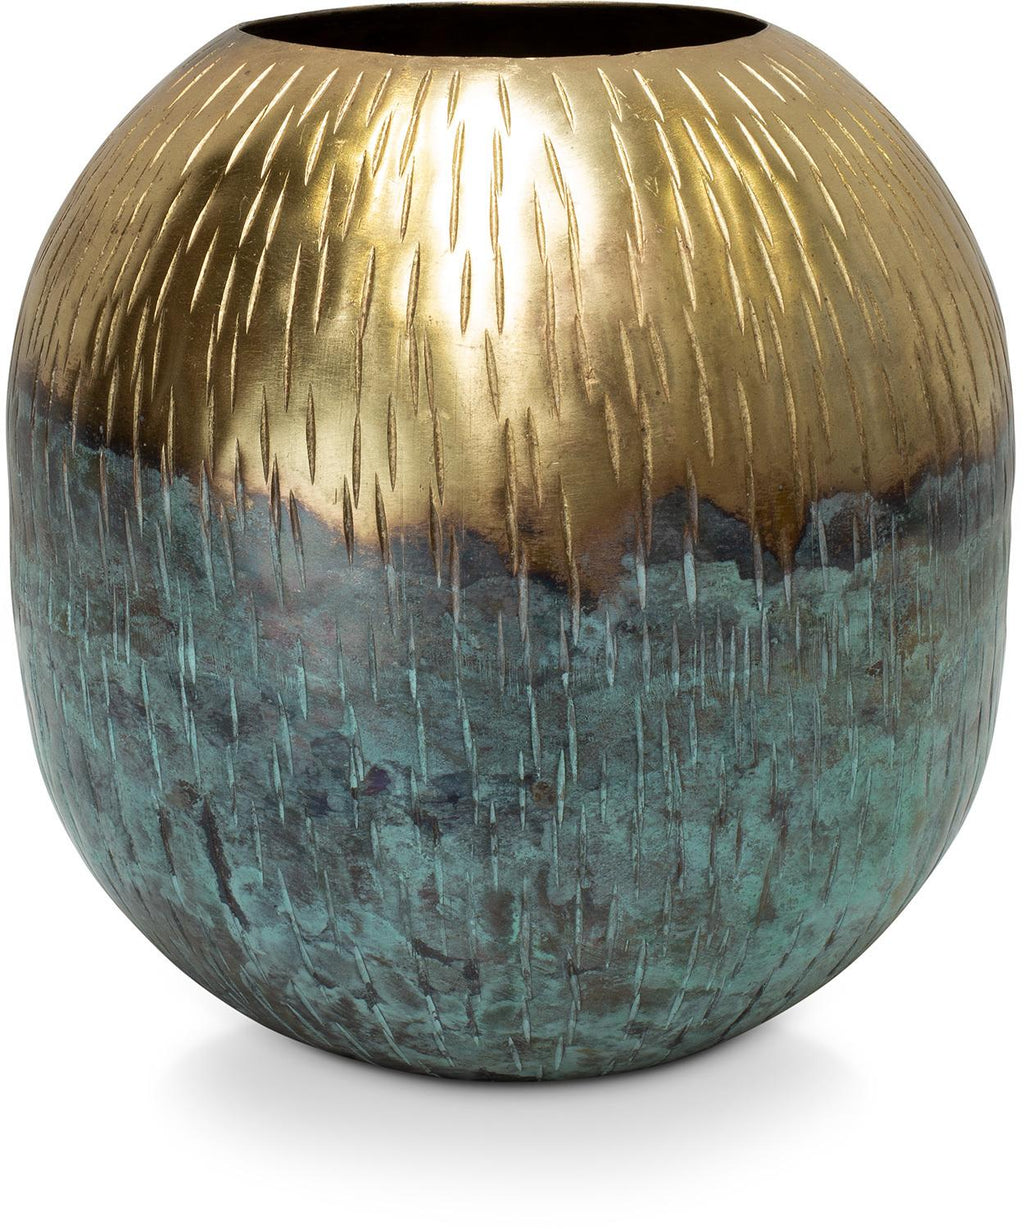 CELOS MYSTIC Deko Vase 24 cm, Gold/Patina